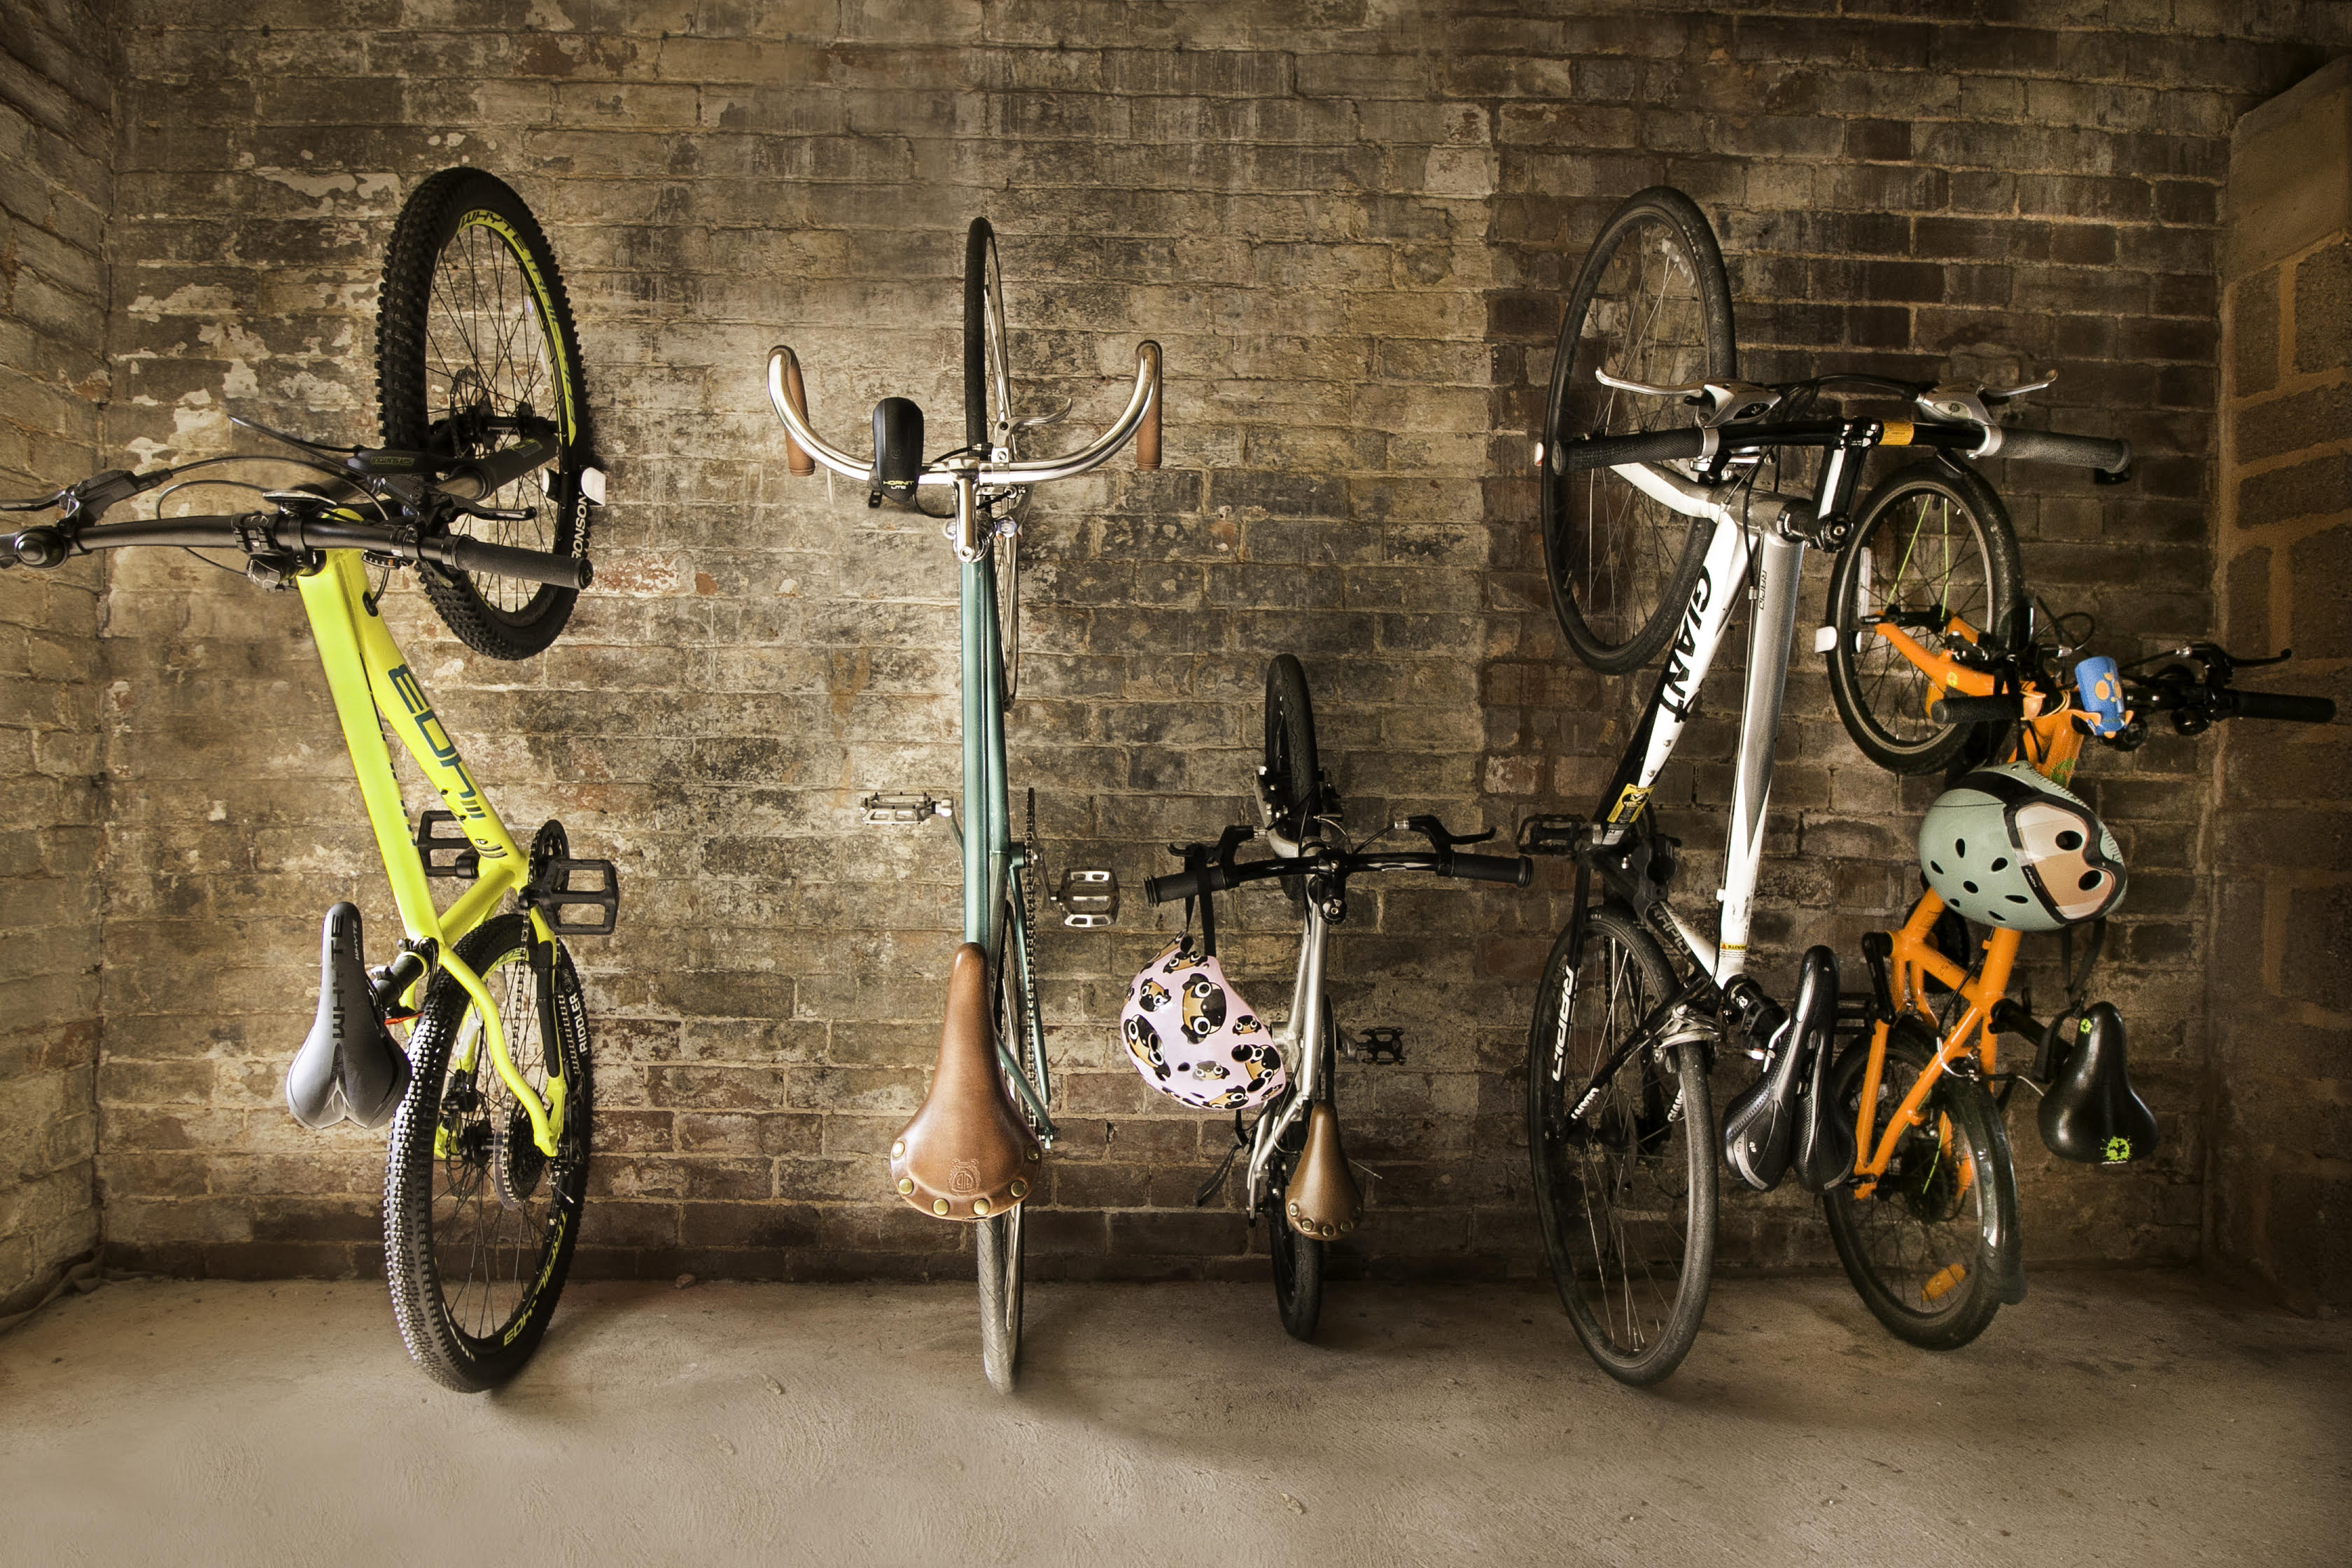 Hornit CLUG bike racks offered in new sizes